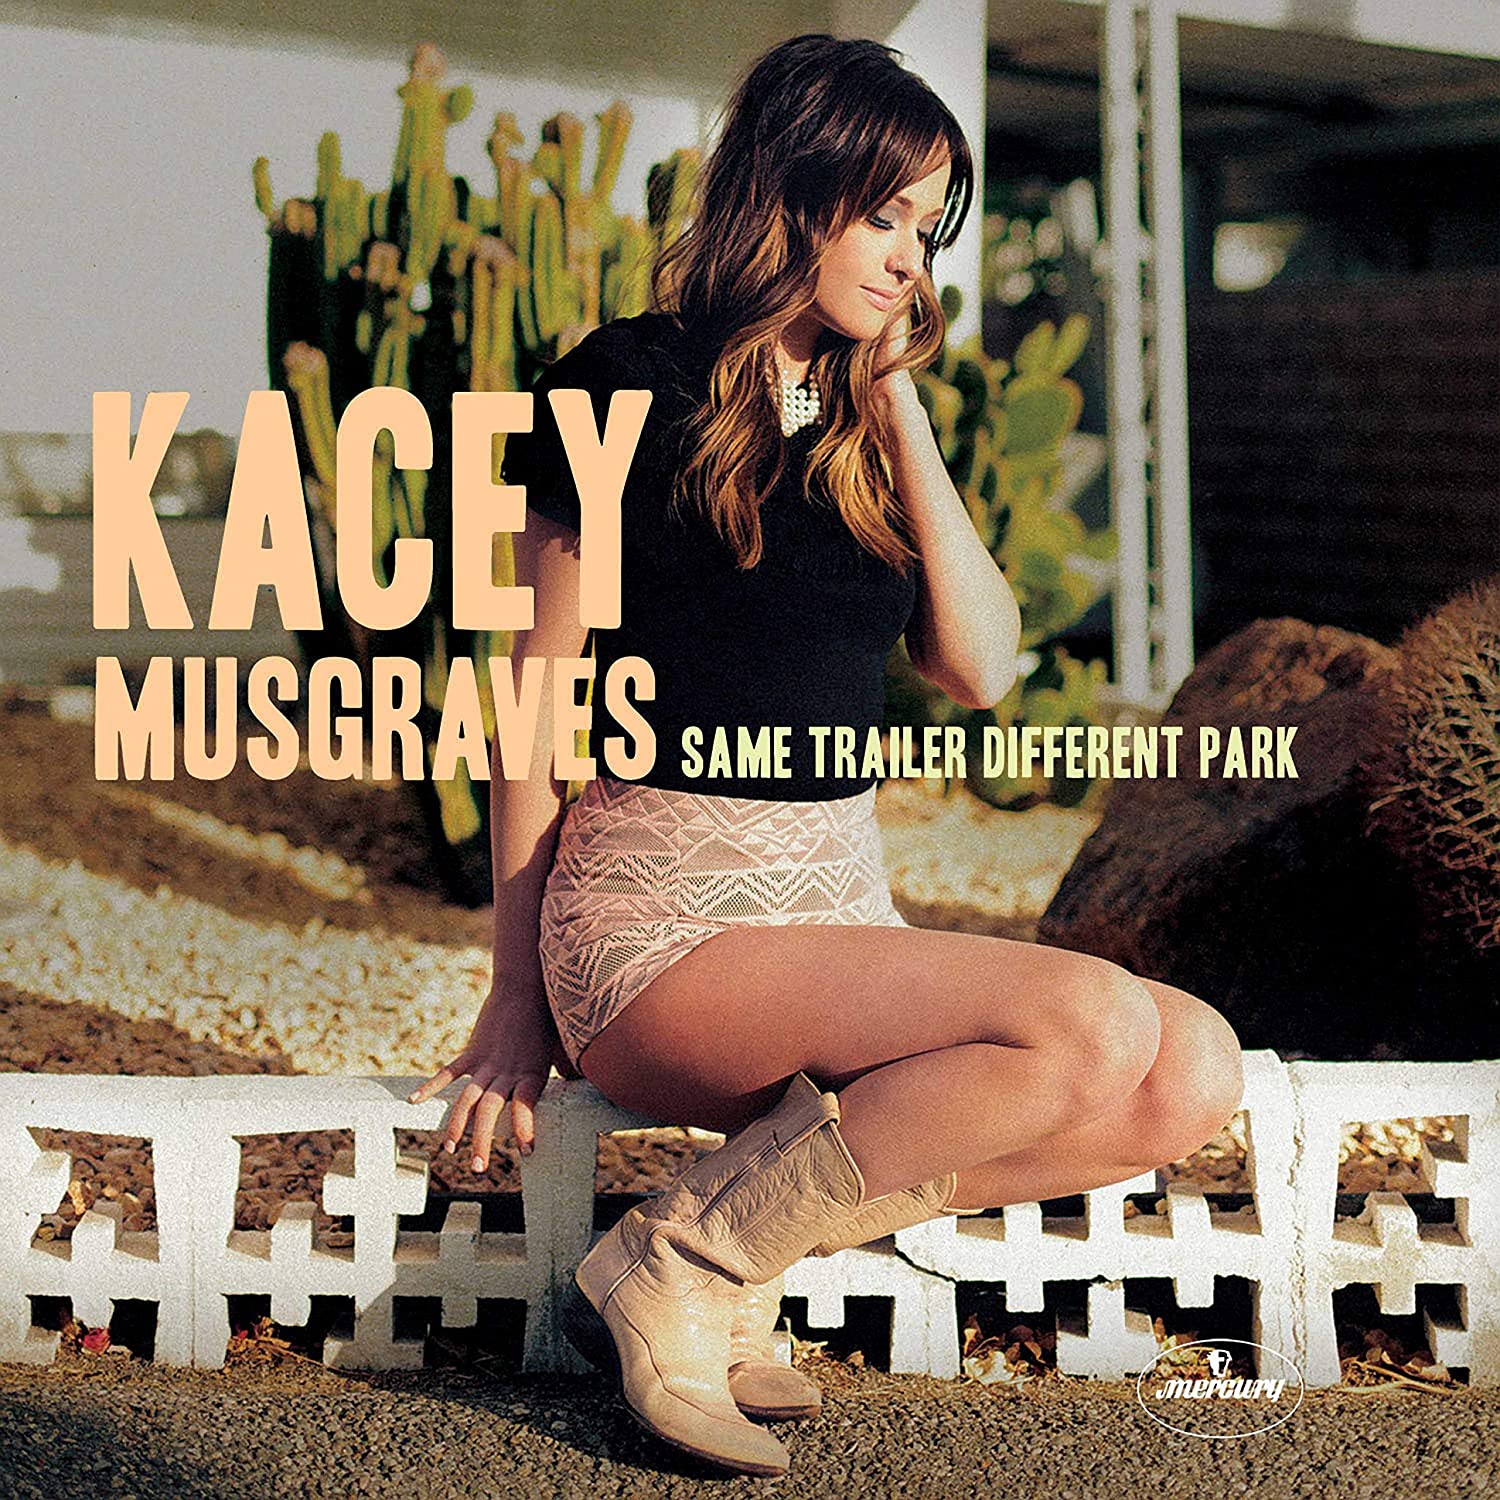 KACEY MUSGRAVES - SAME TRAILER DIFFERENT PARK Vinyl LP